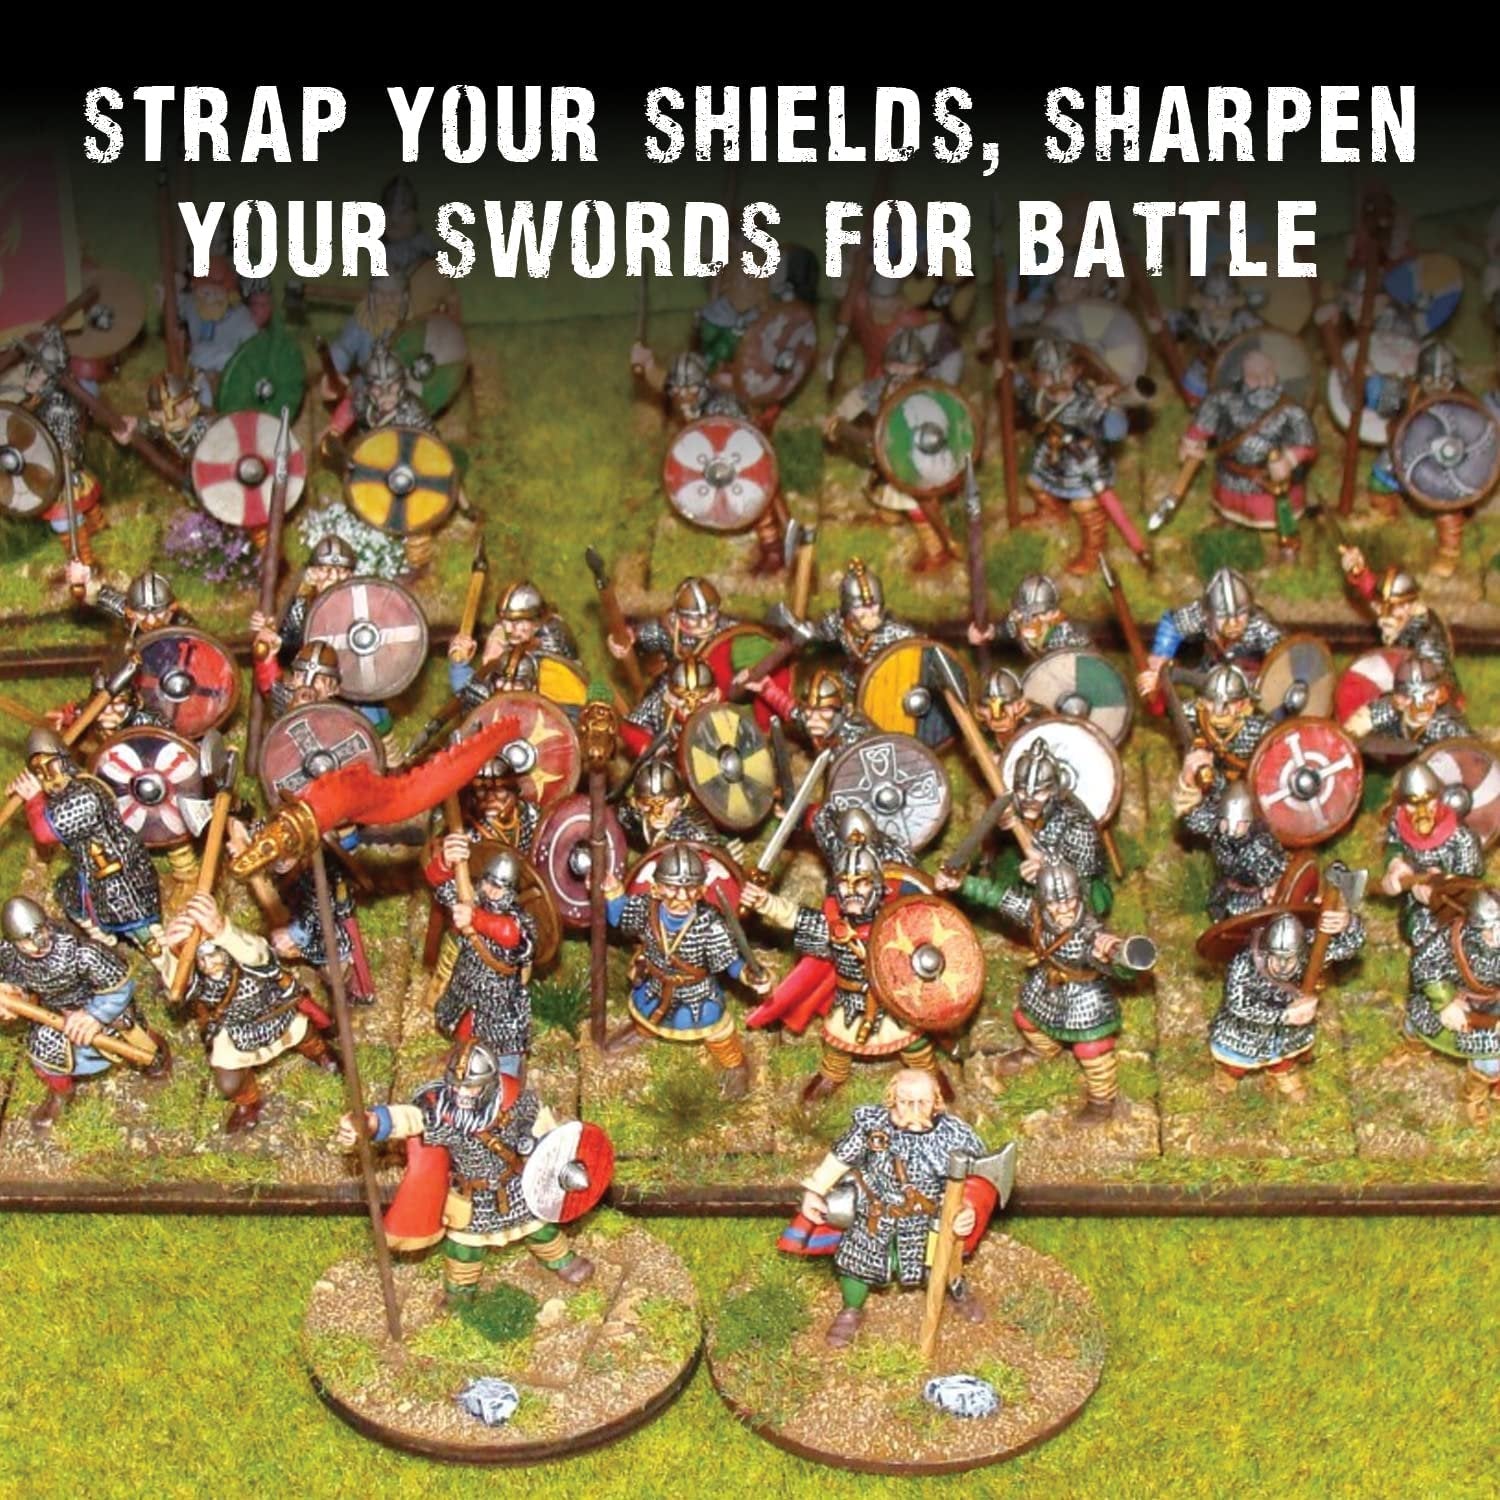 Hail Caesar - The Dark Ages: Saxon Starter Army